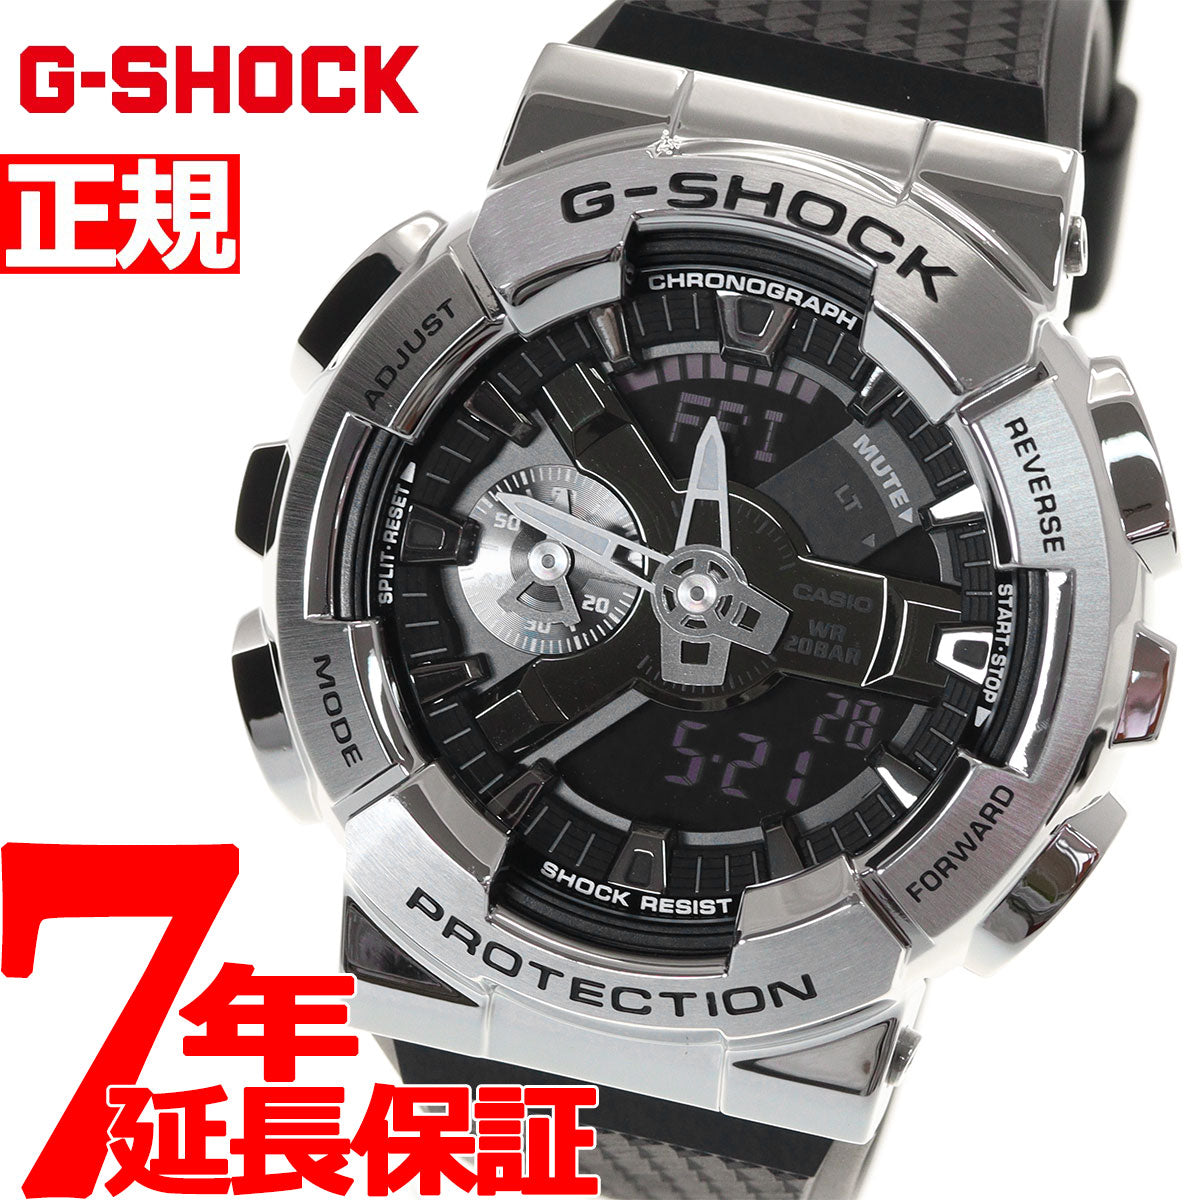 G-SHOCK ジーショク GM-110-1AJF-connectedremag.com